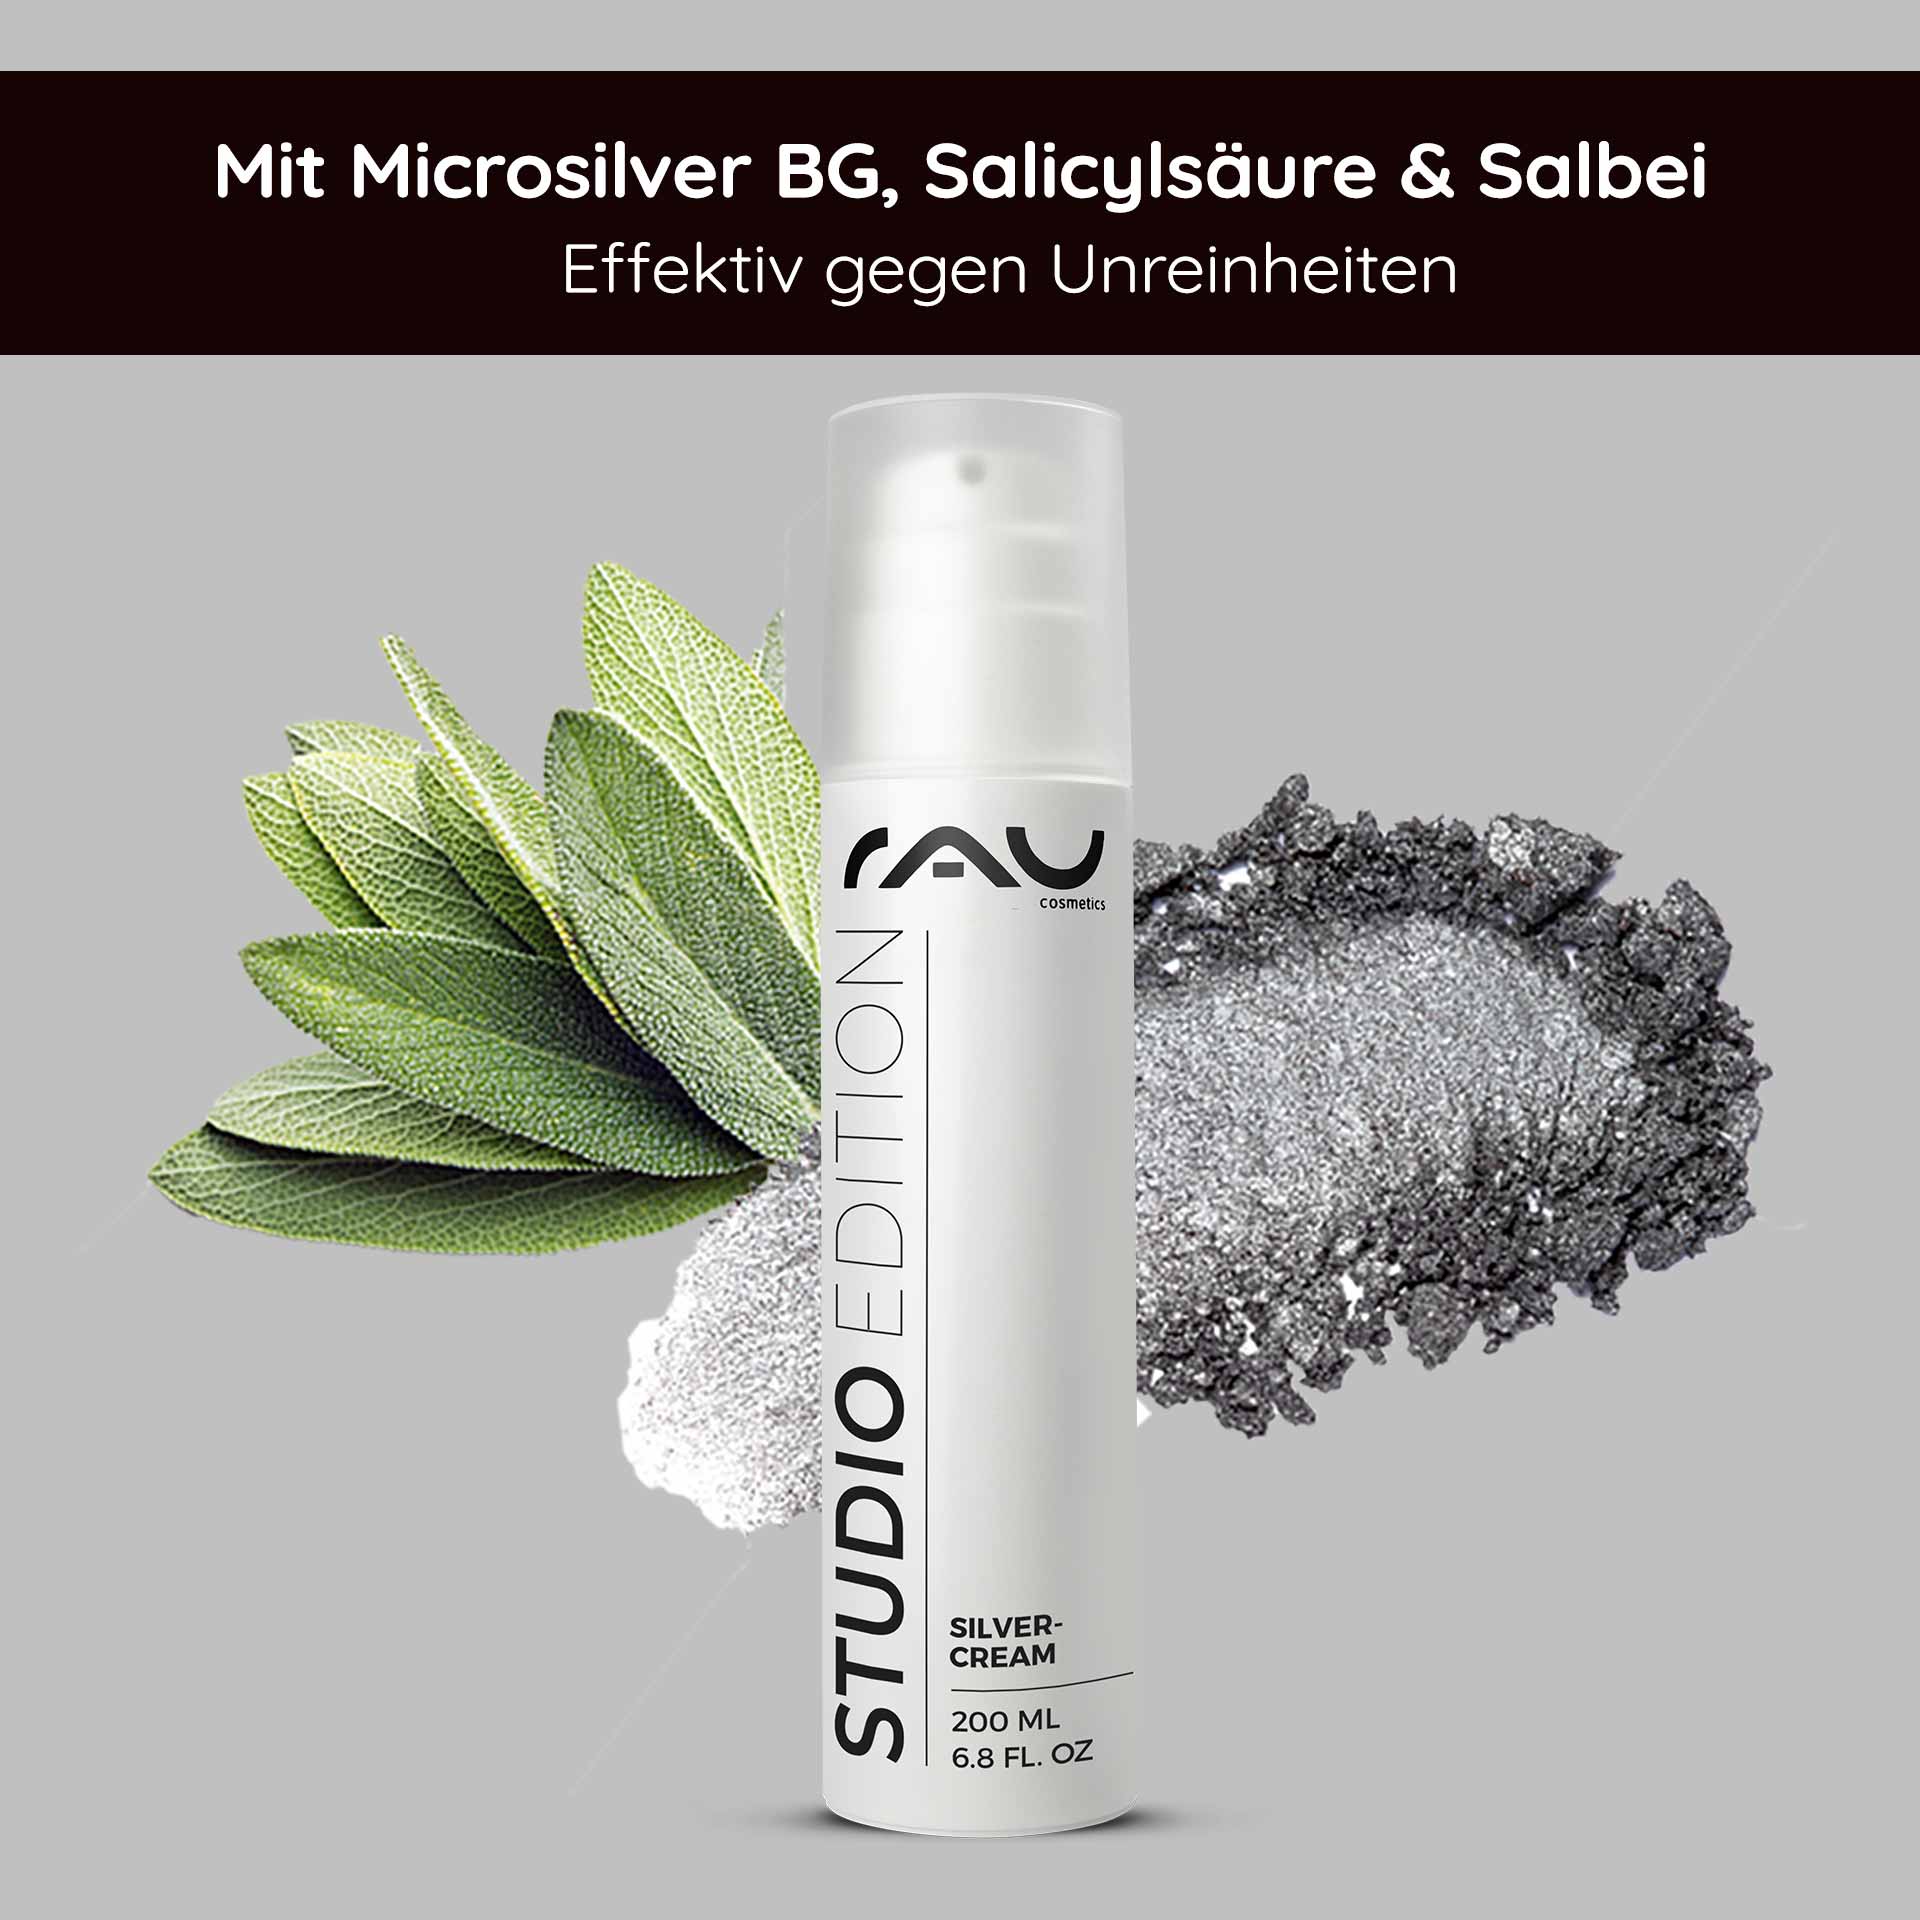 Silvercream 200 ml for impure skin with microsilver